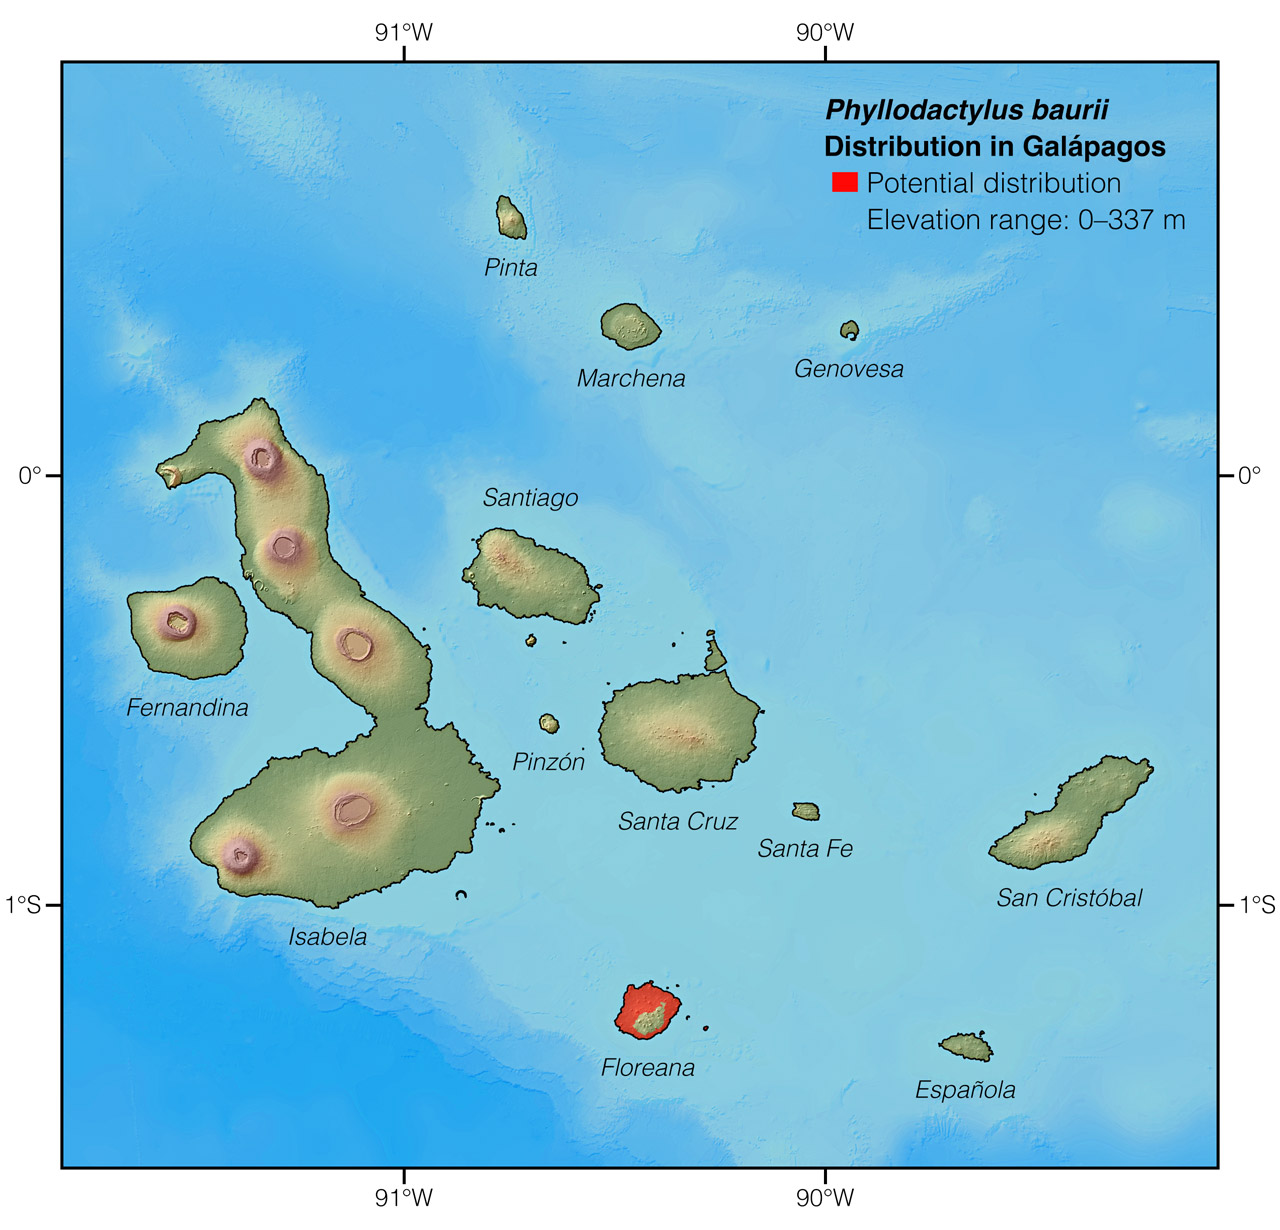 Distribution of Phyllodactylus baurii in Galápagos